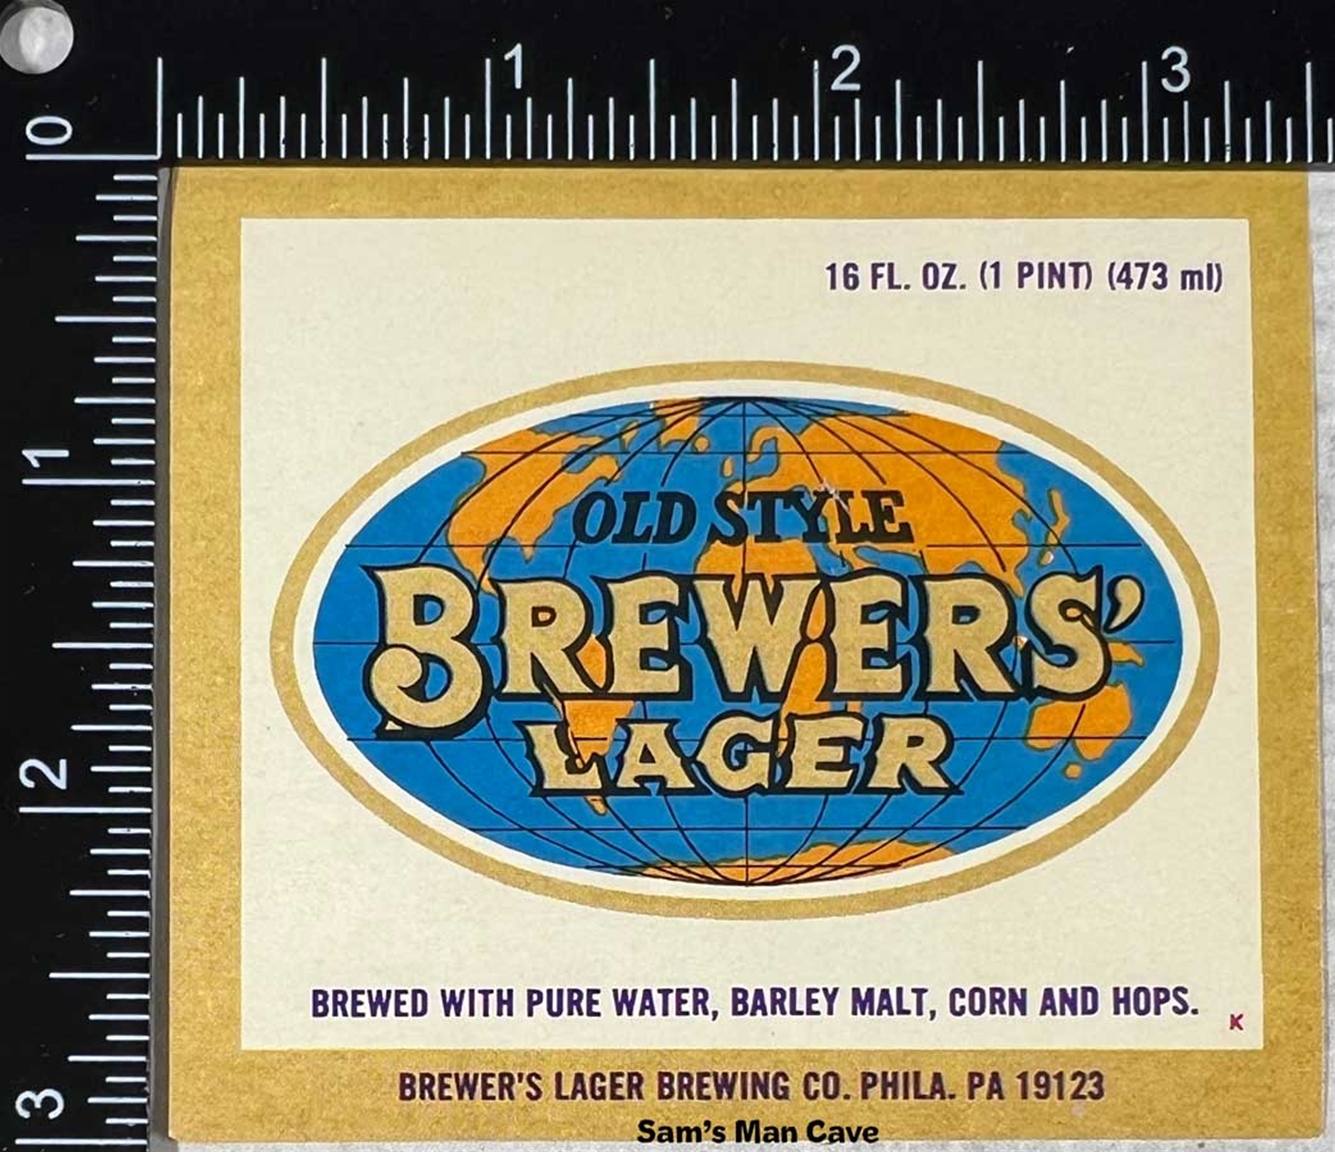 Brewer's Lager Beer Label